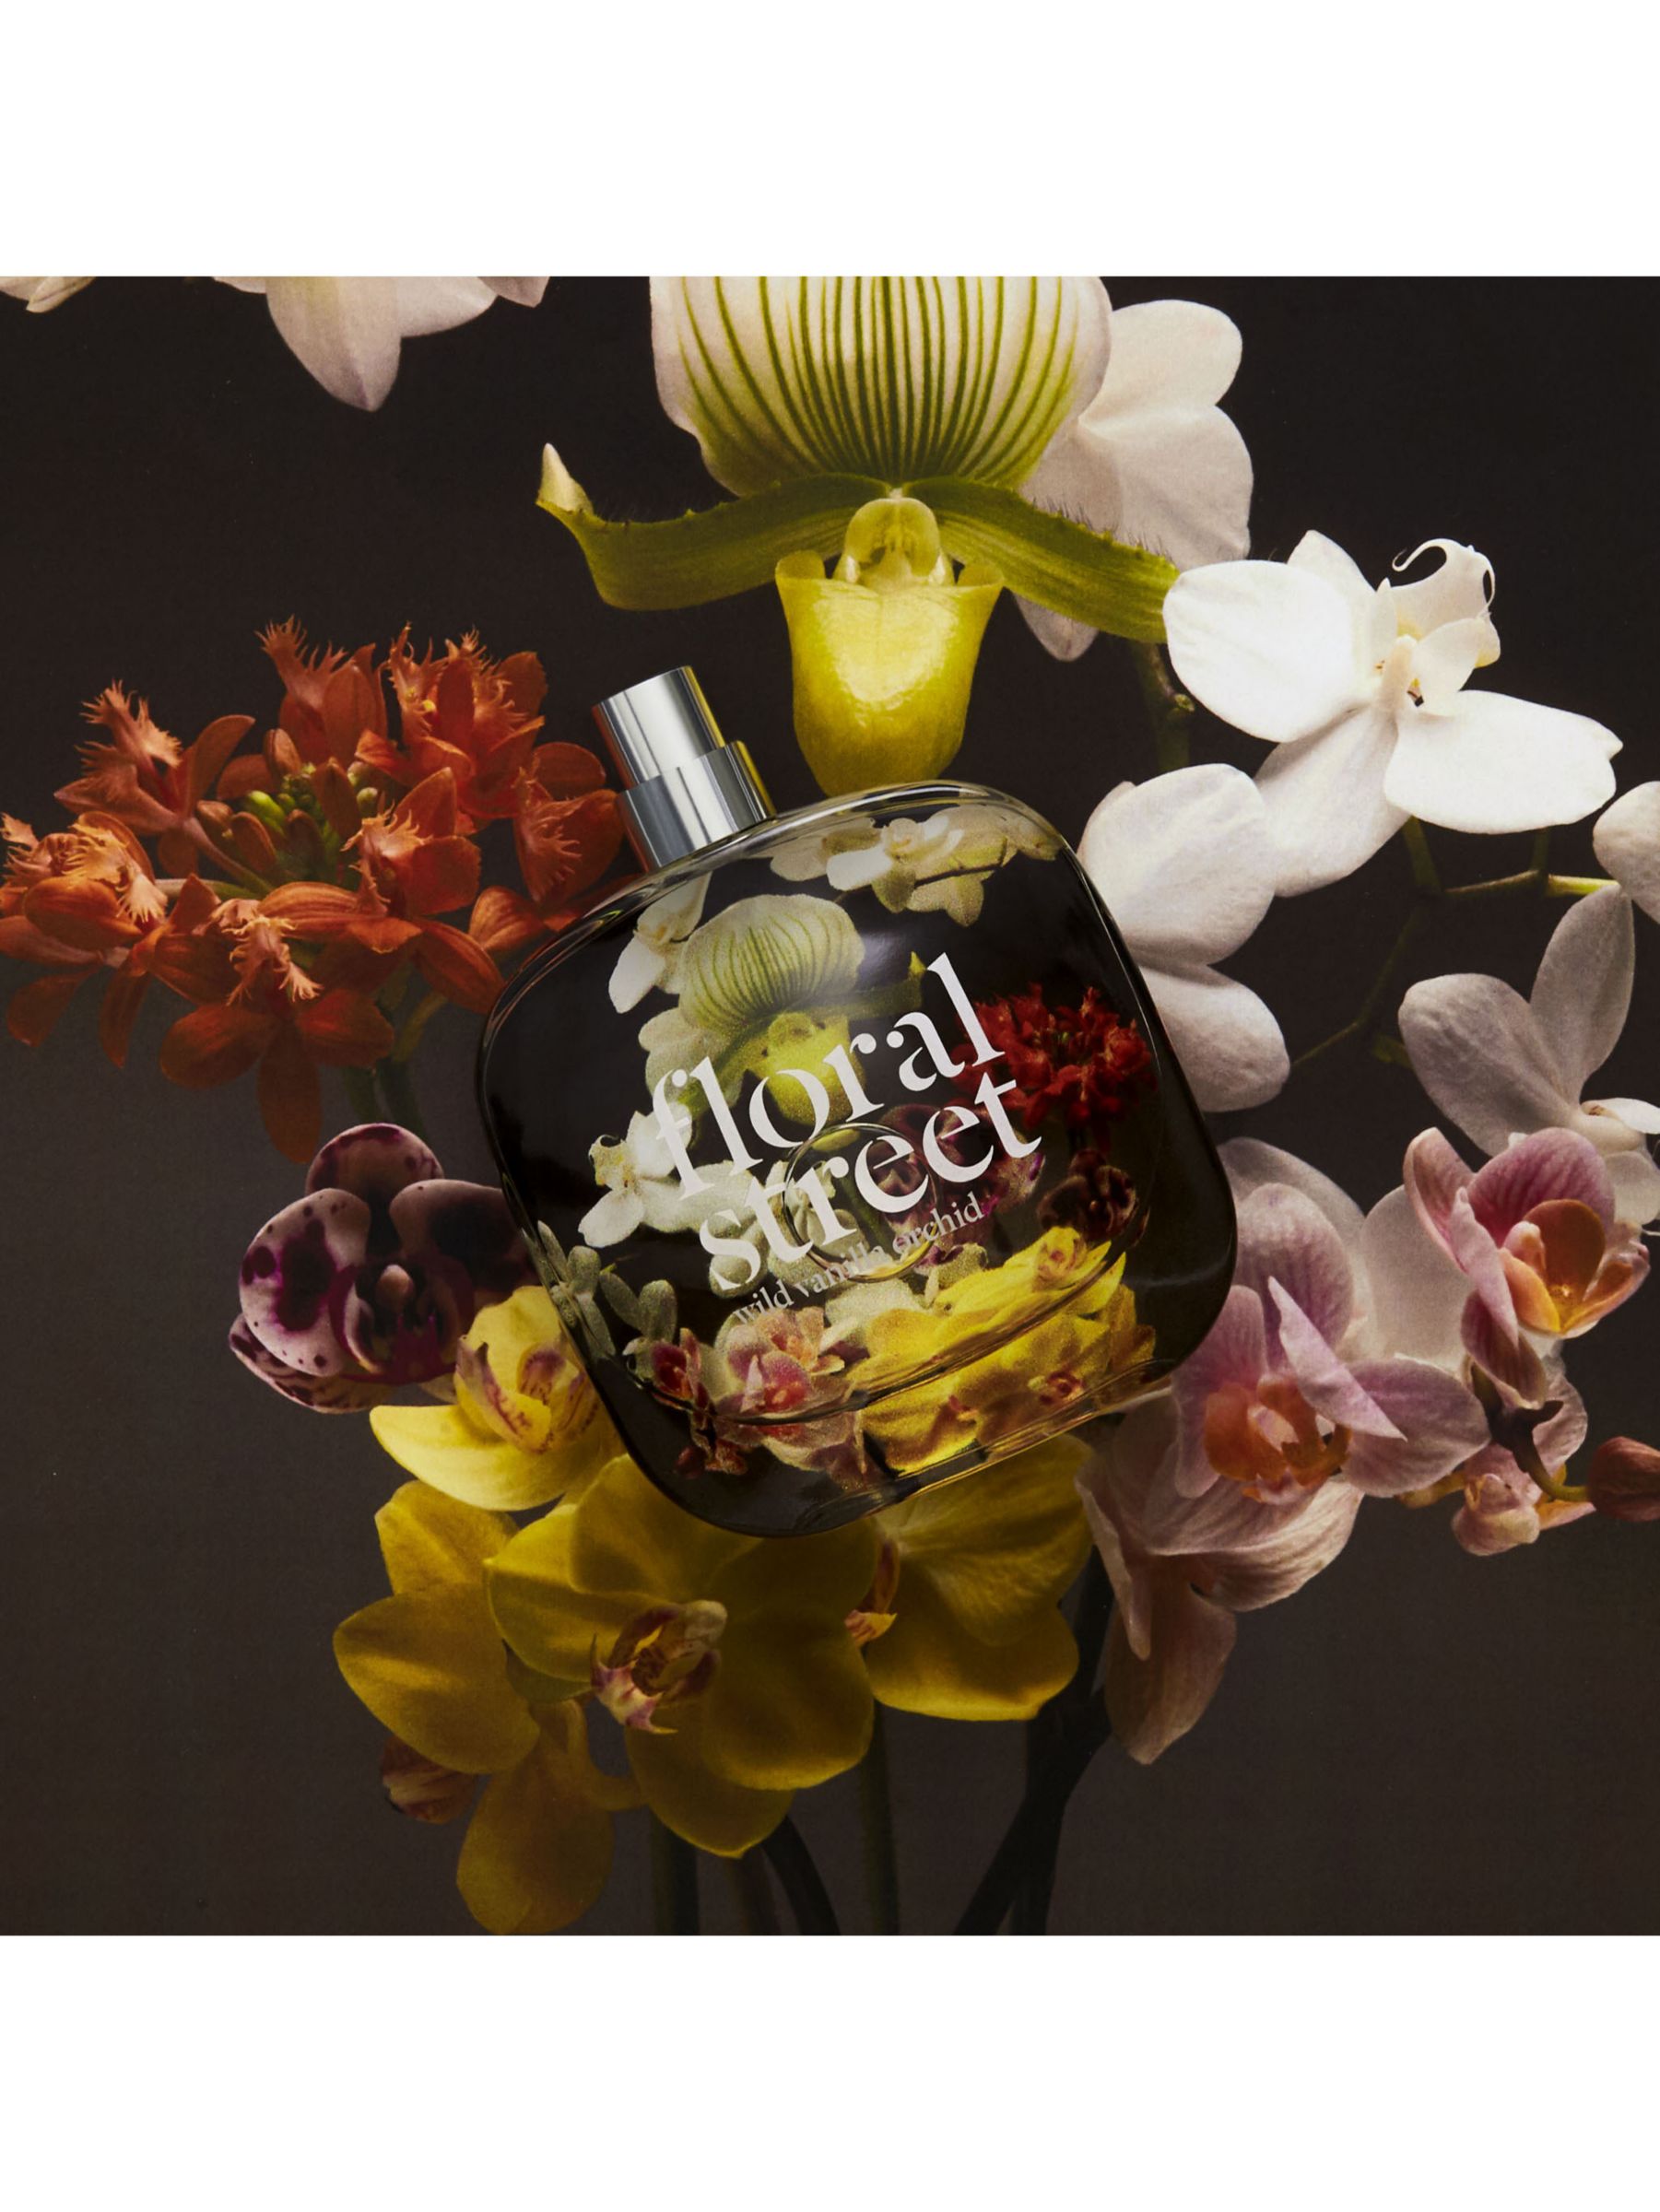 Floral Street Wild Vanilla Orchid Eau de Parfum, 50ml 4